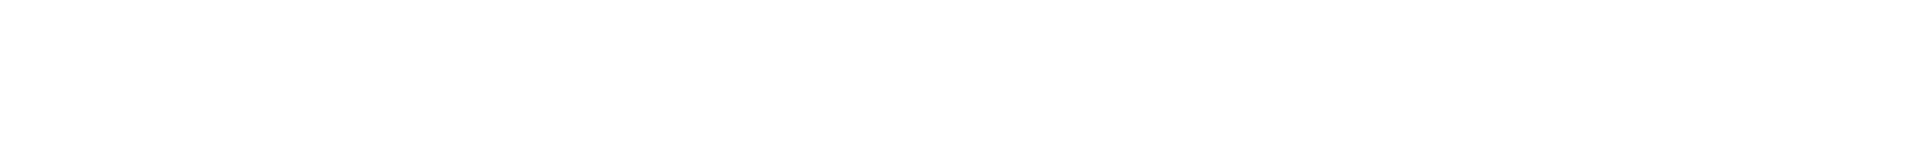 i-SPEED 2 Series logo.